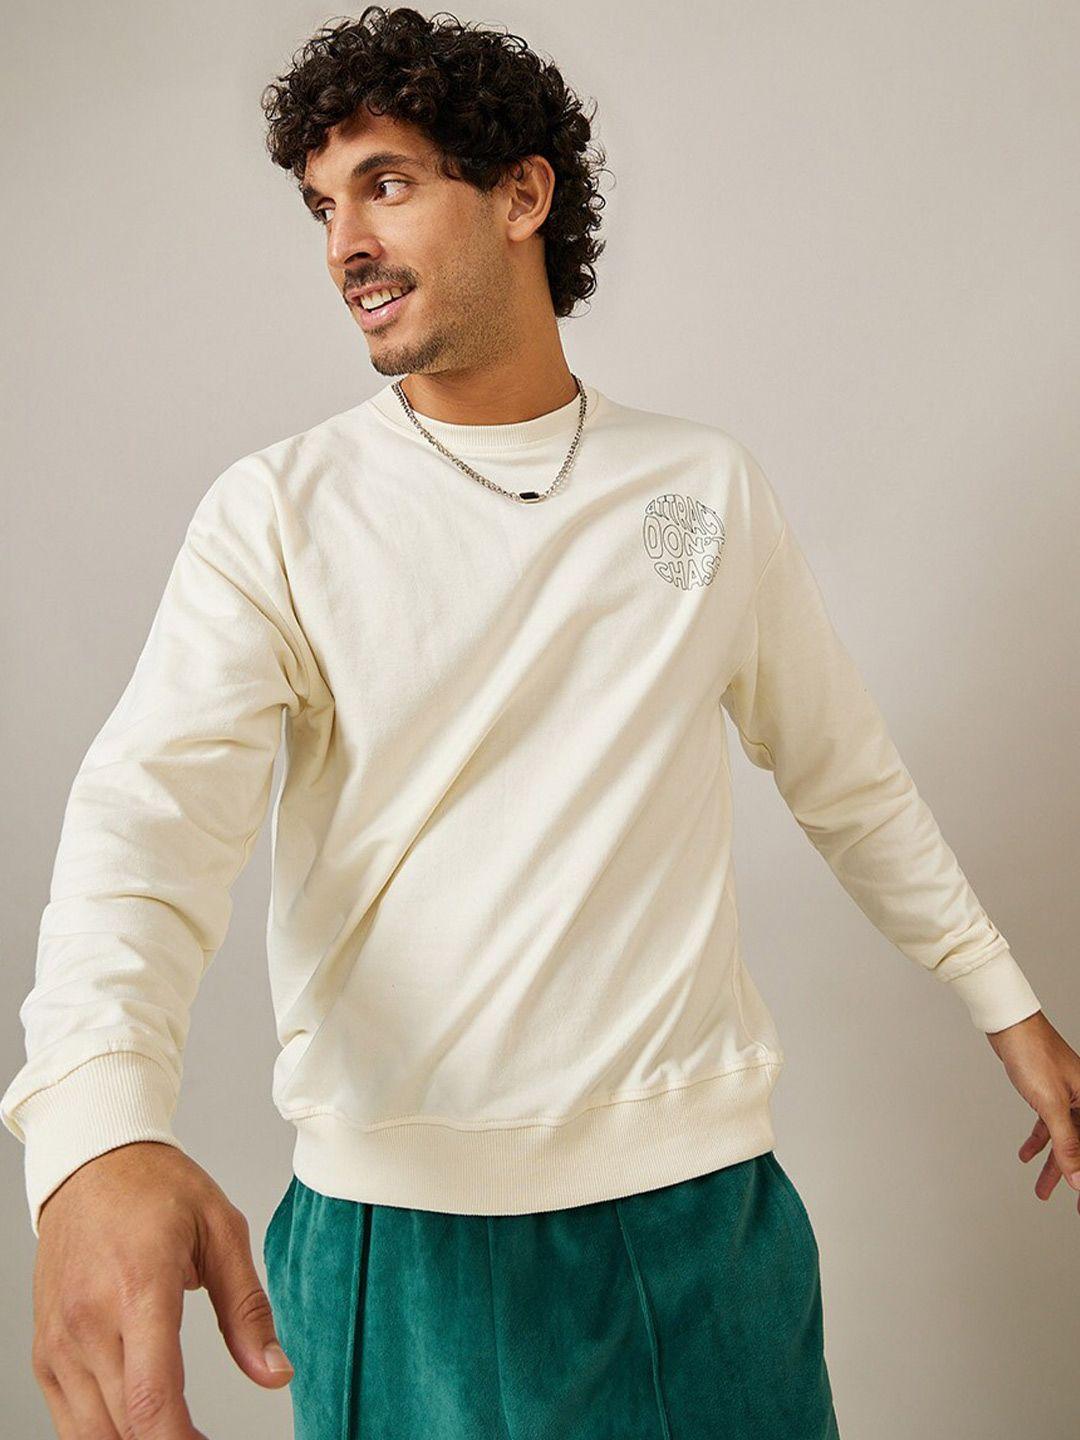 styli-men-cream-coloured-solid-cotton-sweatshirt